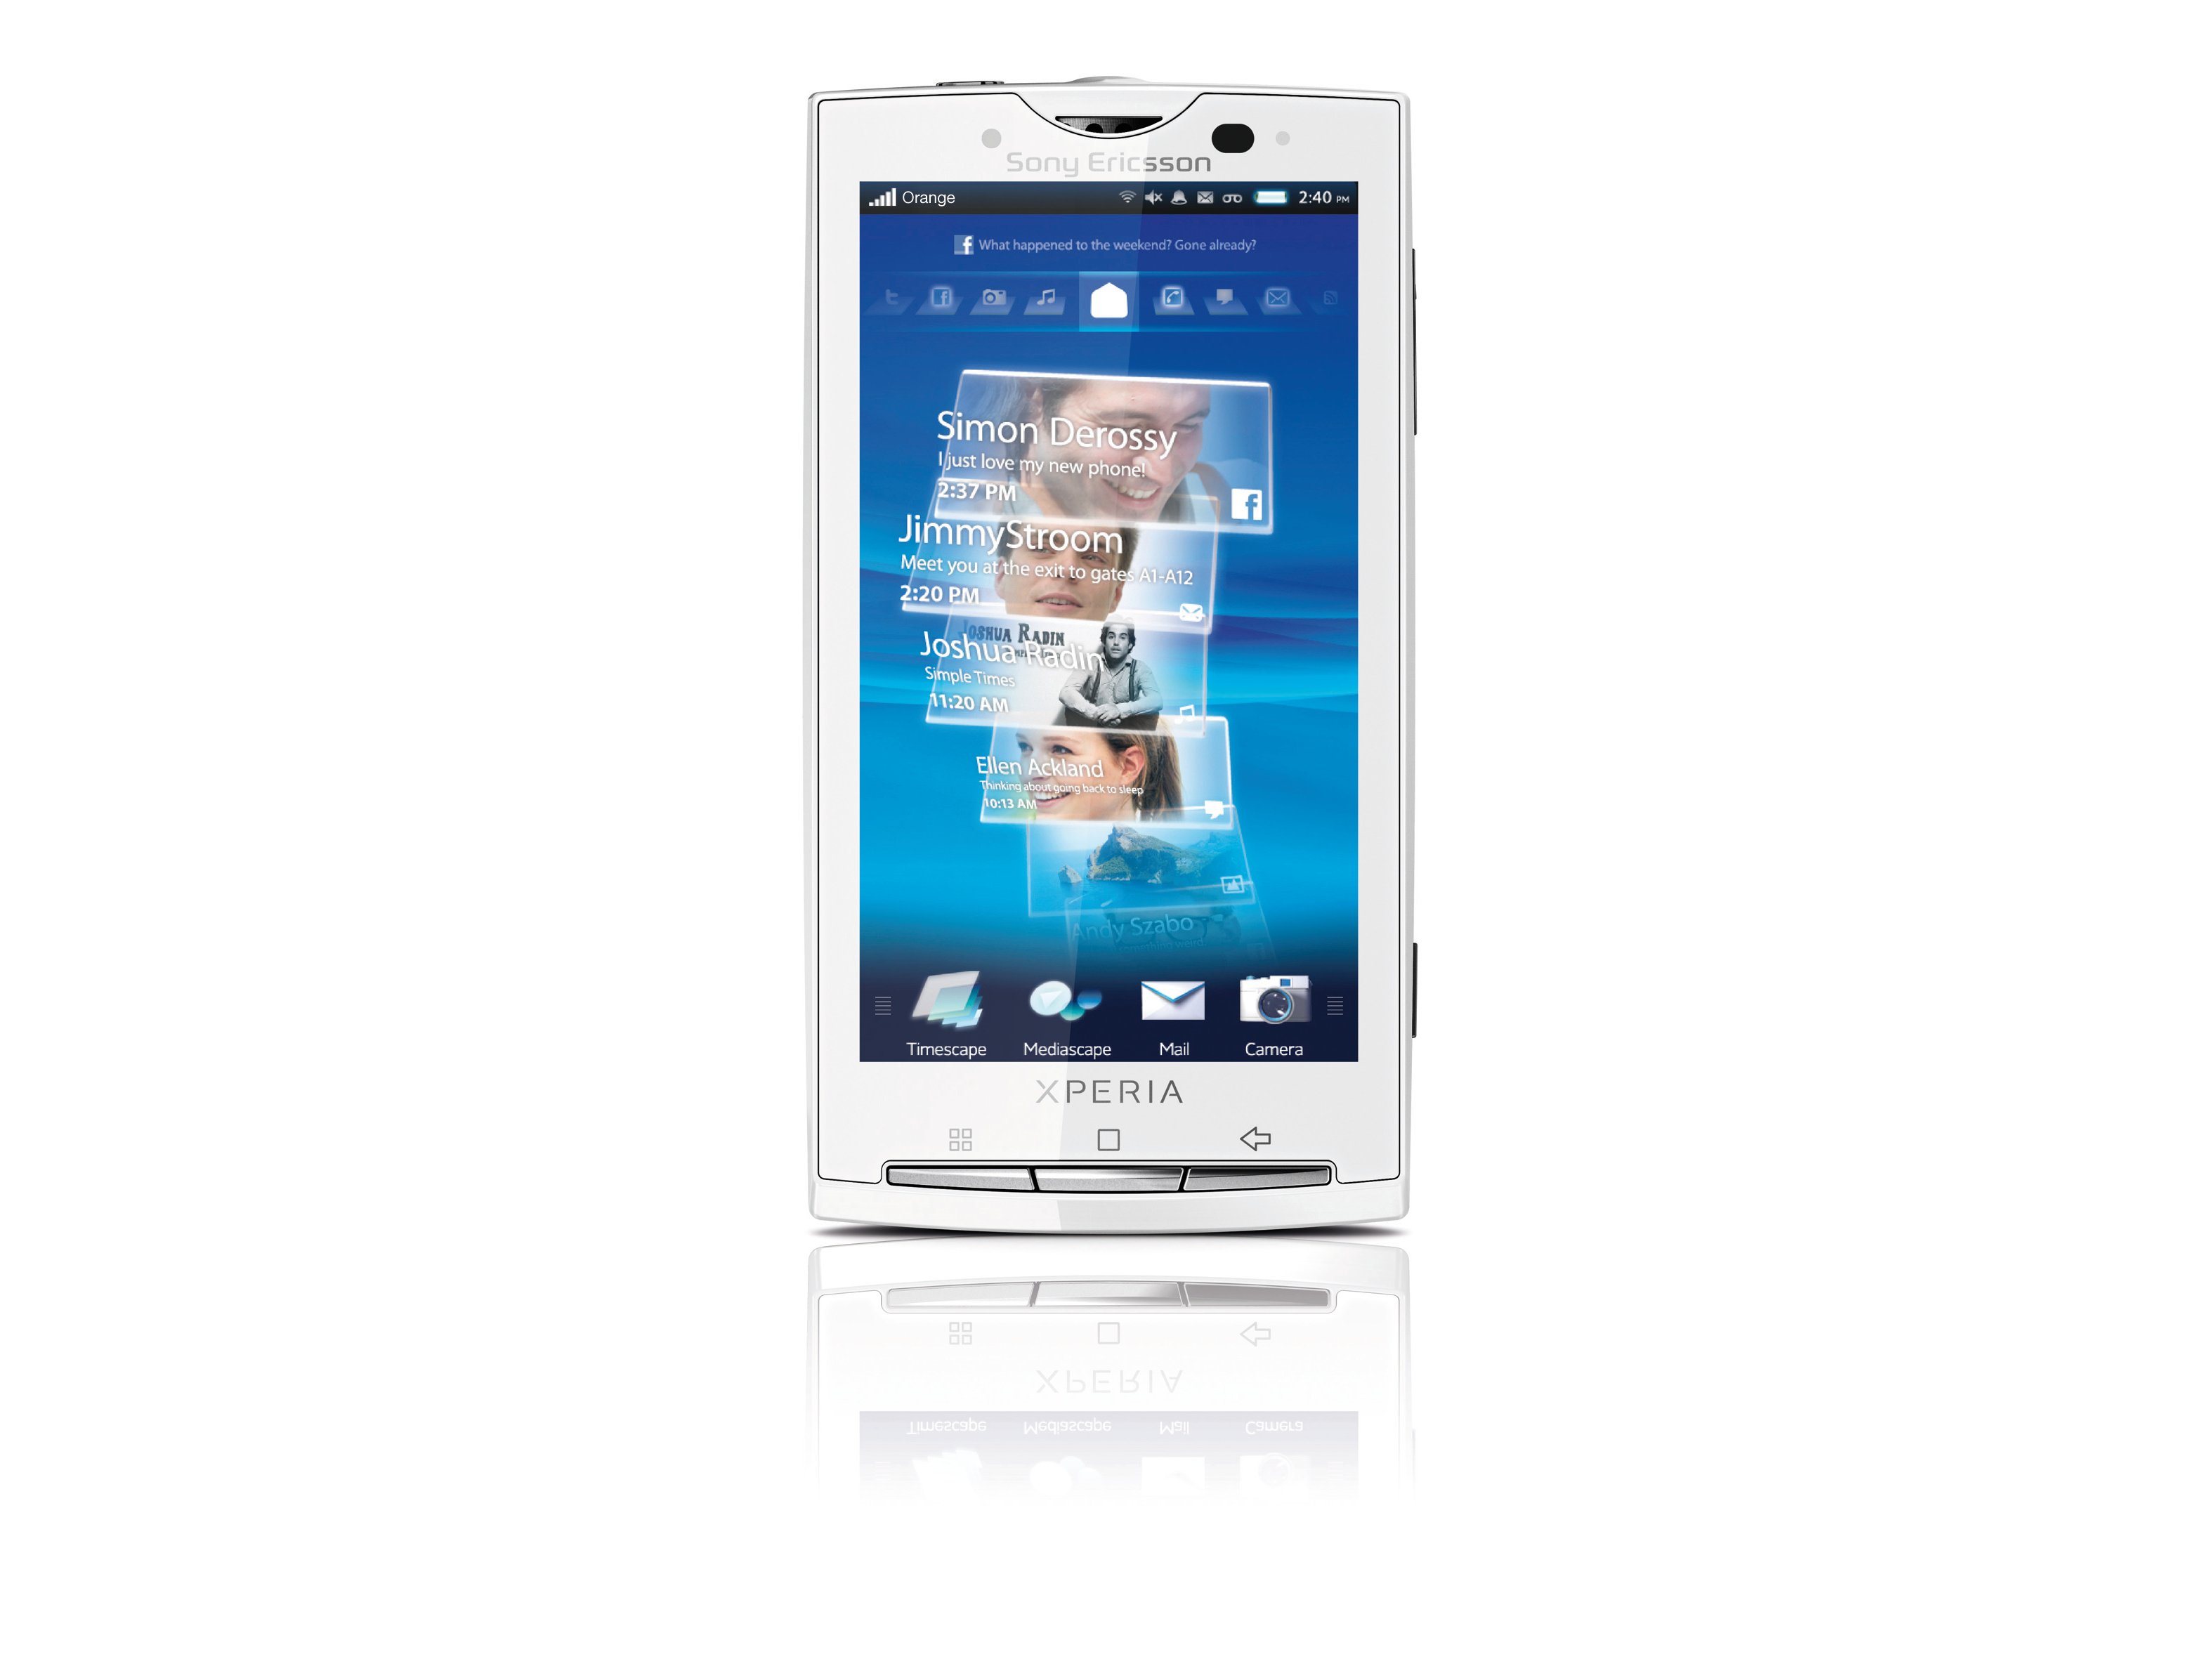 Sony Ericsson Xperia X10 review |